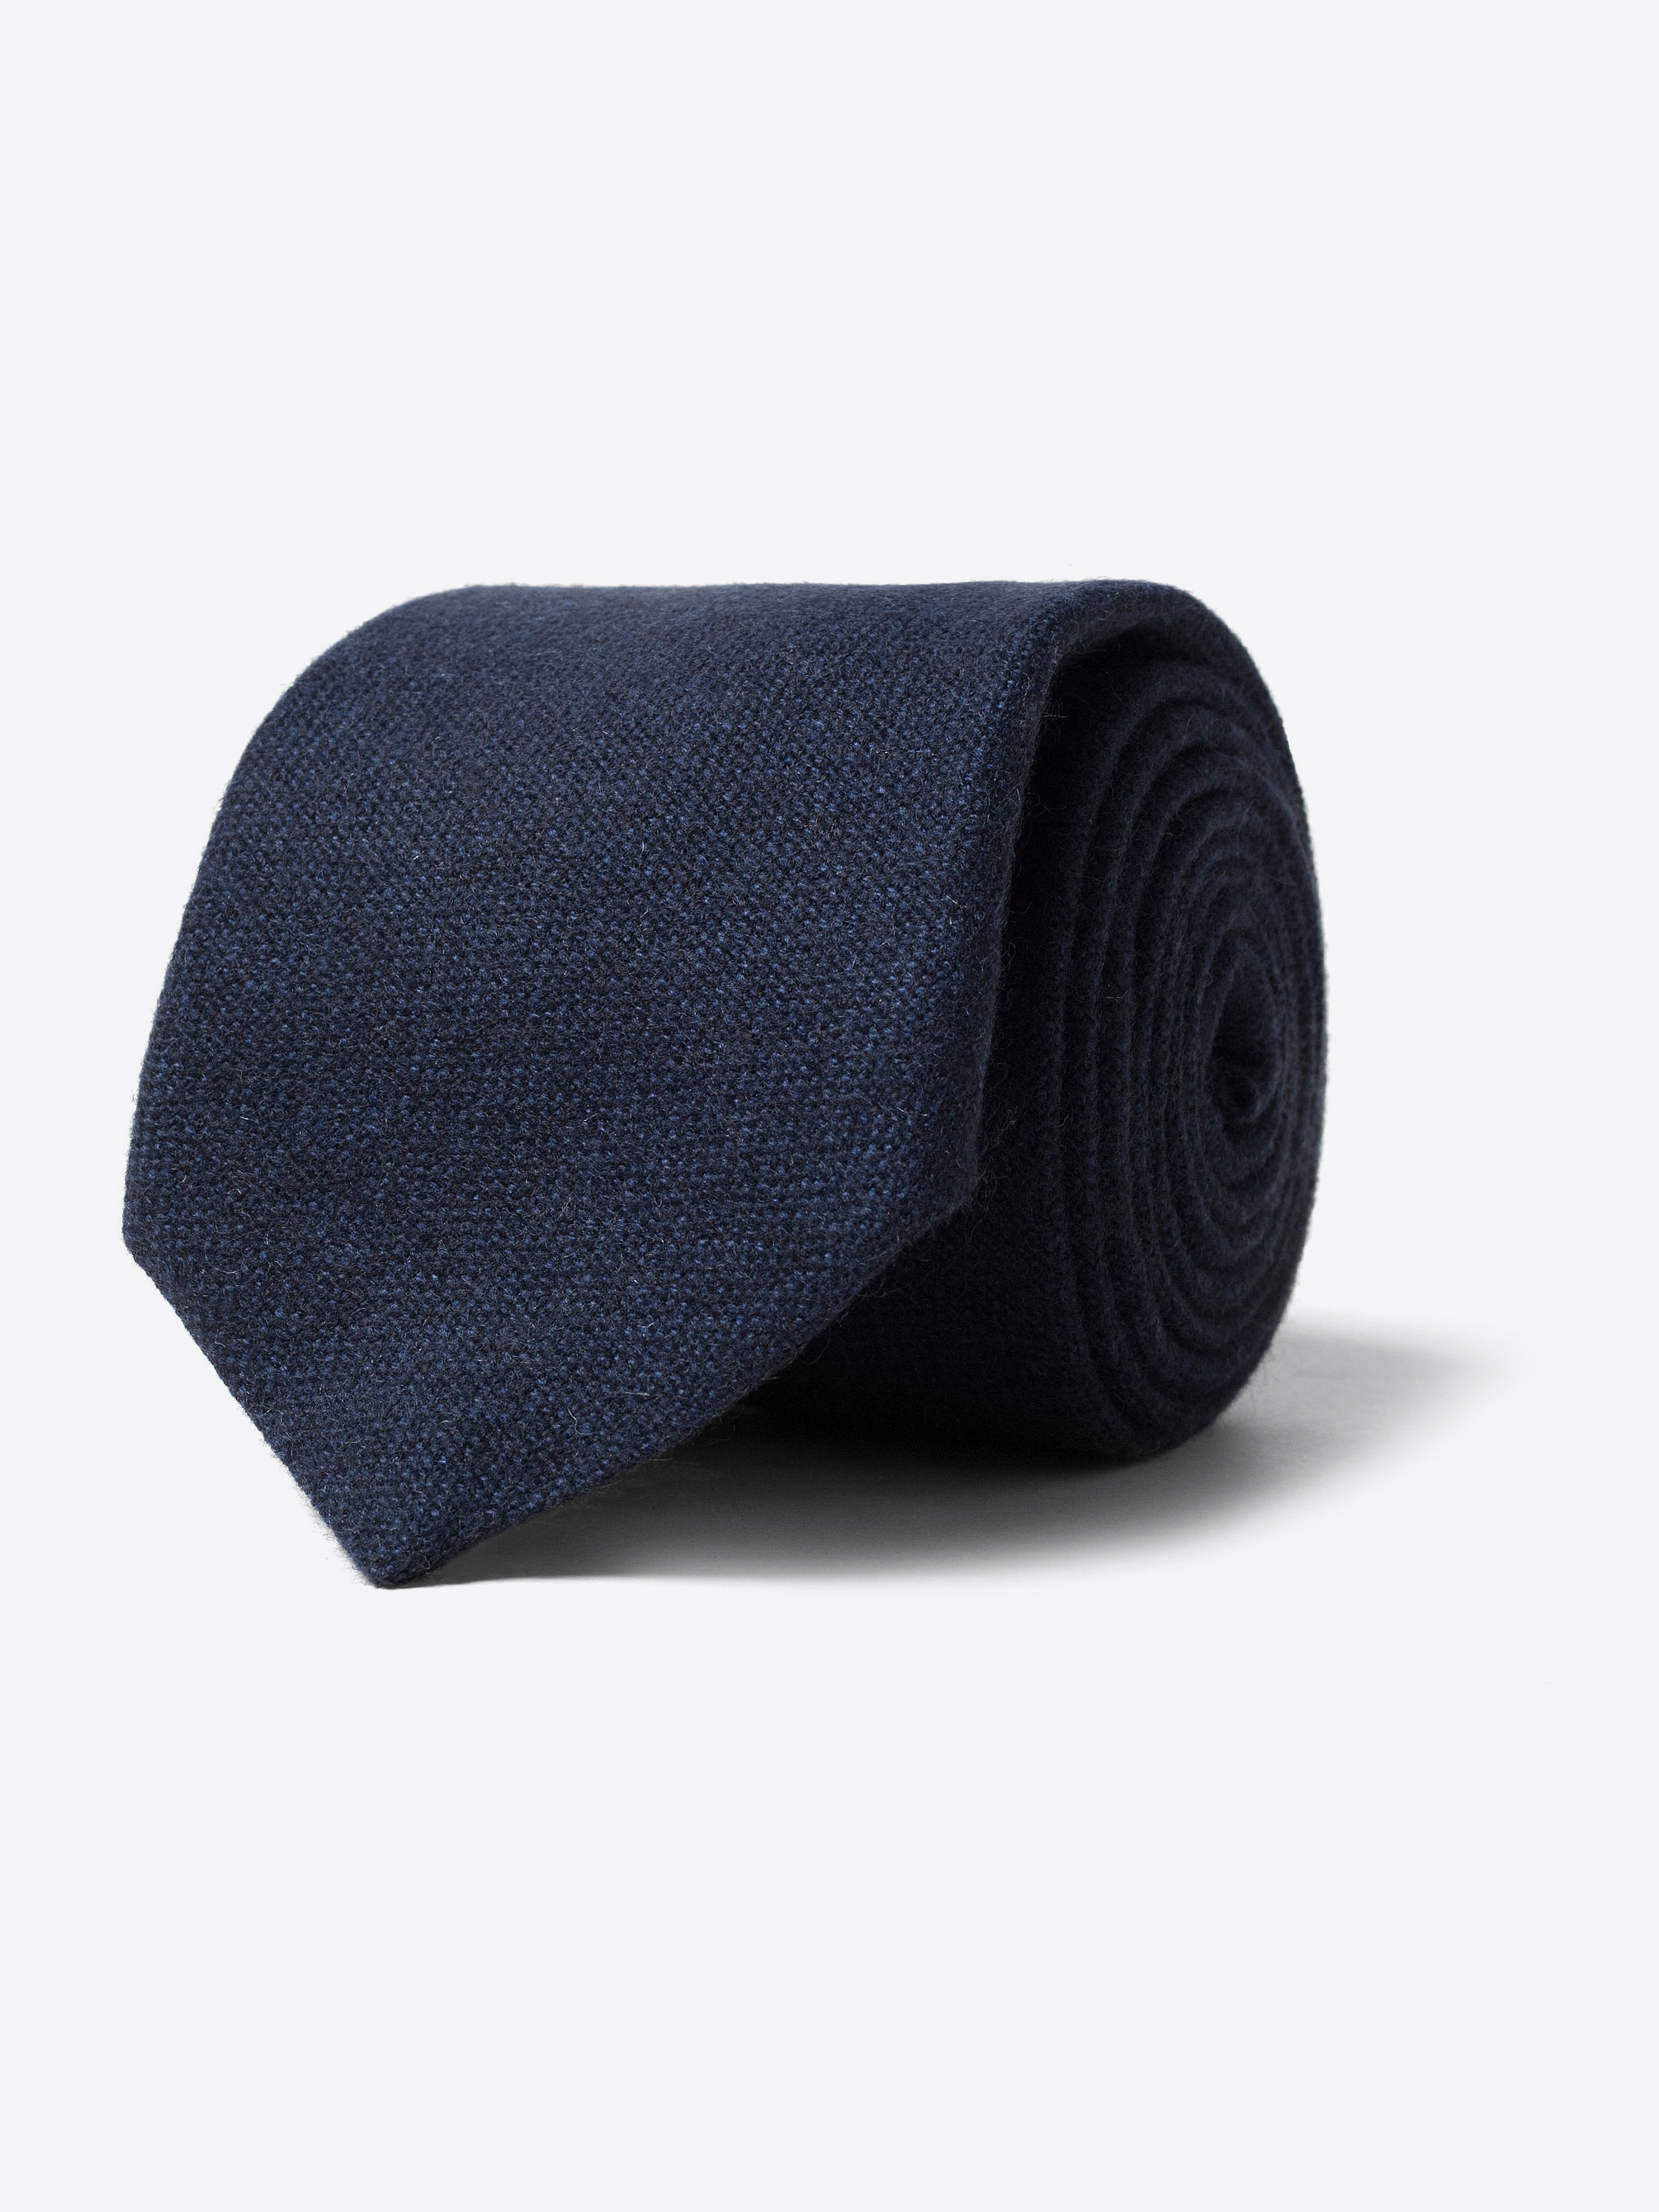 Zoom Image of Navy Cashmere Tie